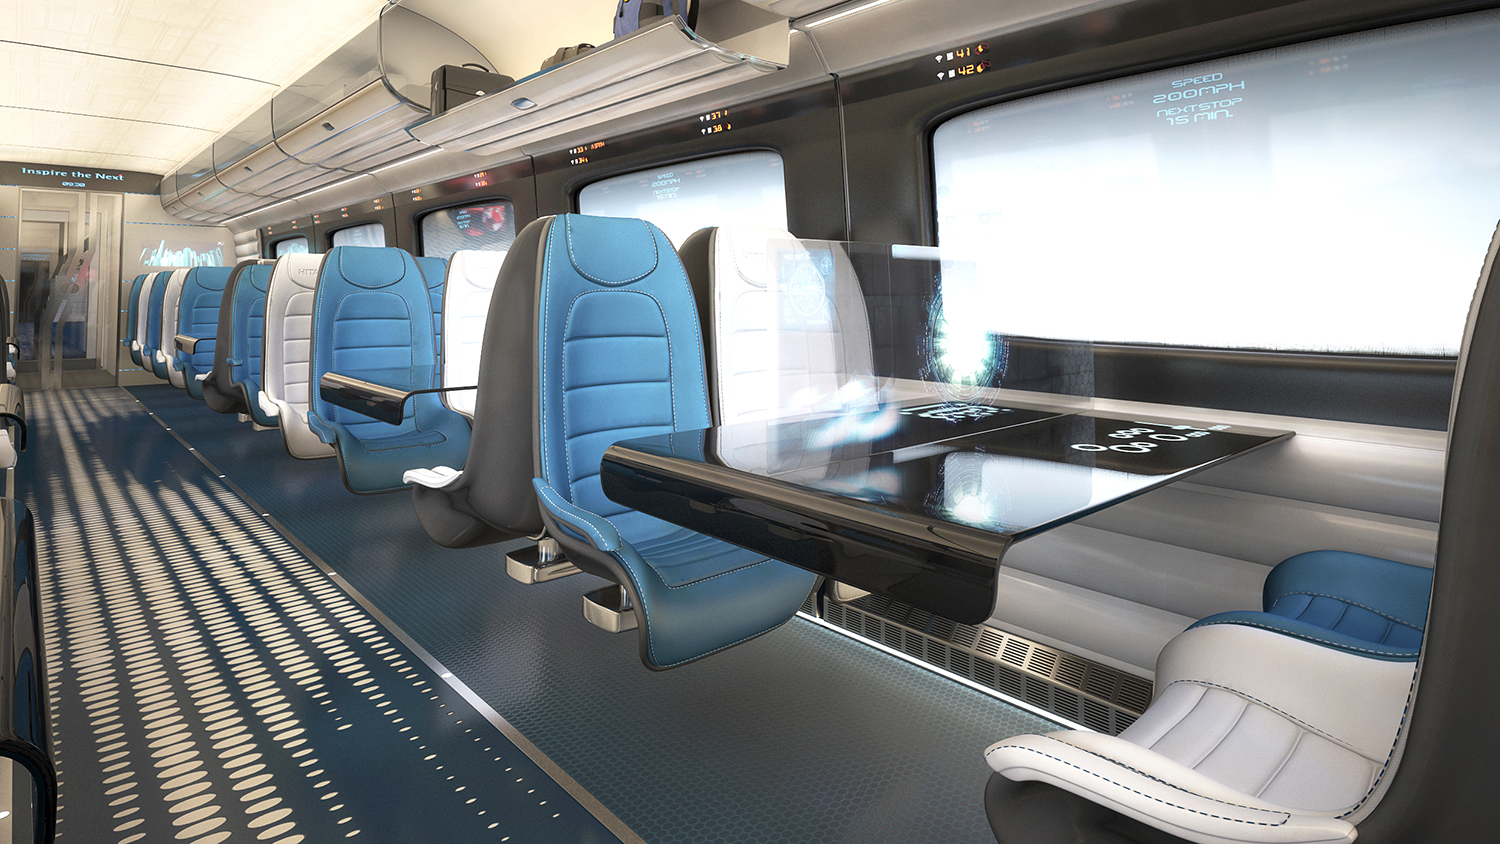 New Design for Hitachi Train Interiors